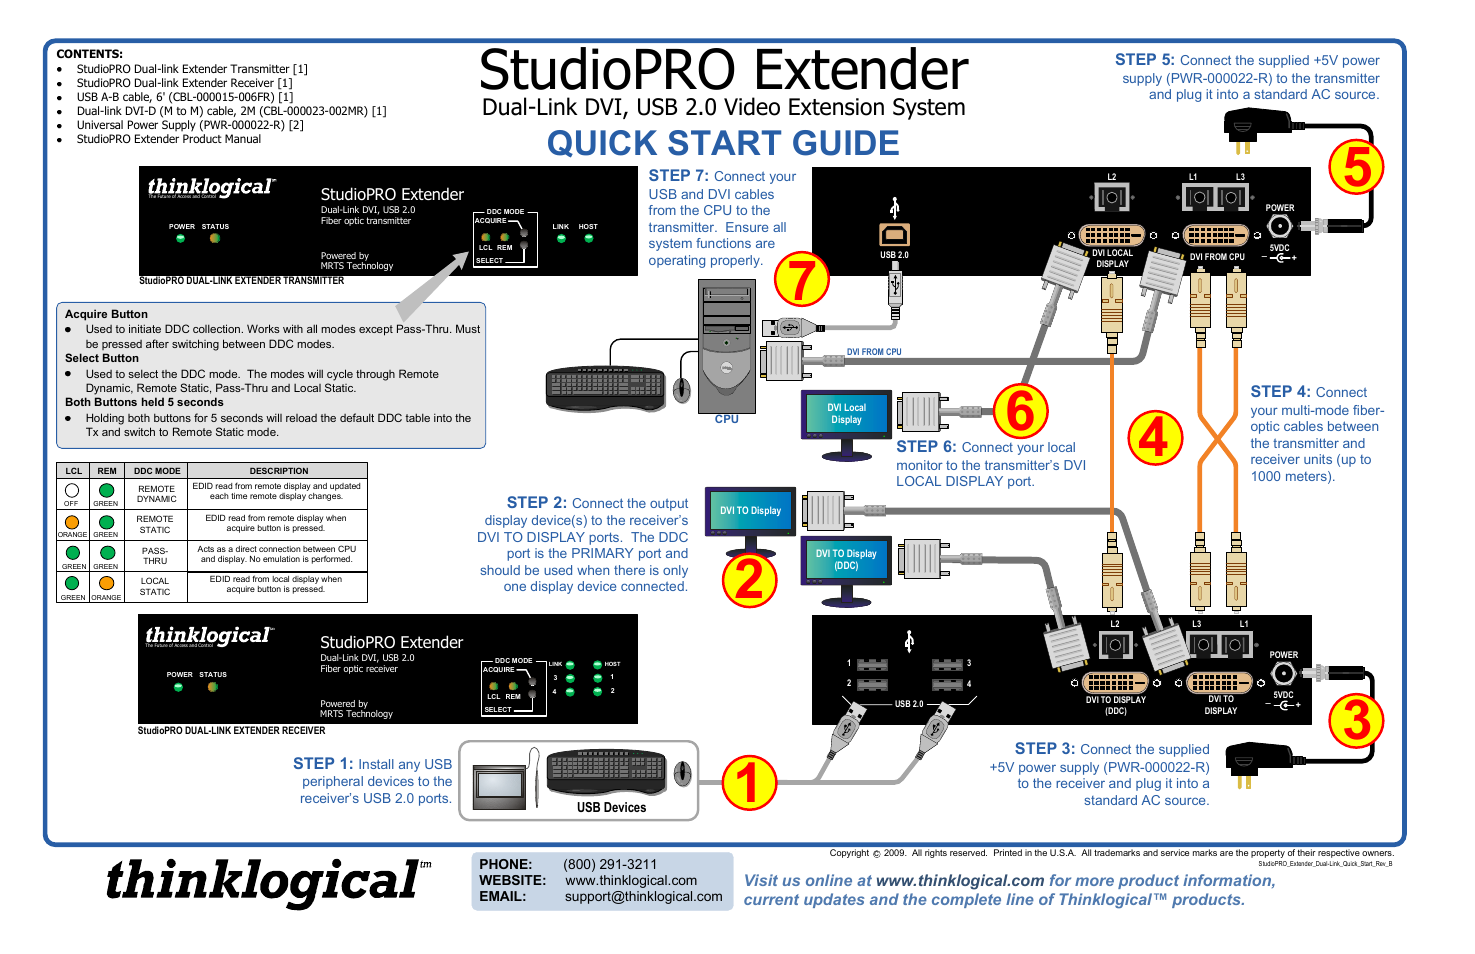 StudioPRO Extender Dual Link Quick Start Guide